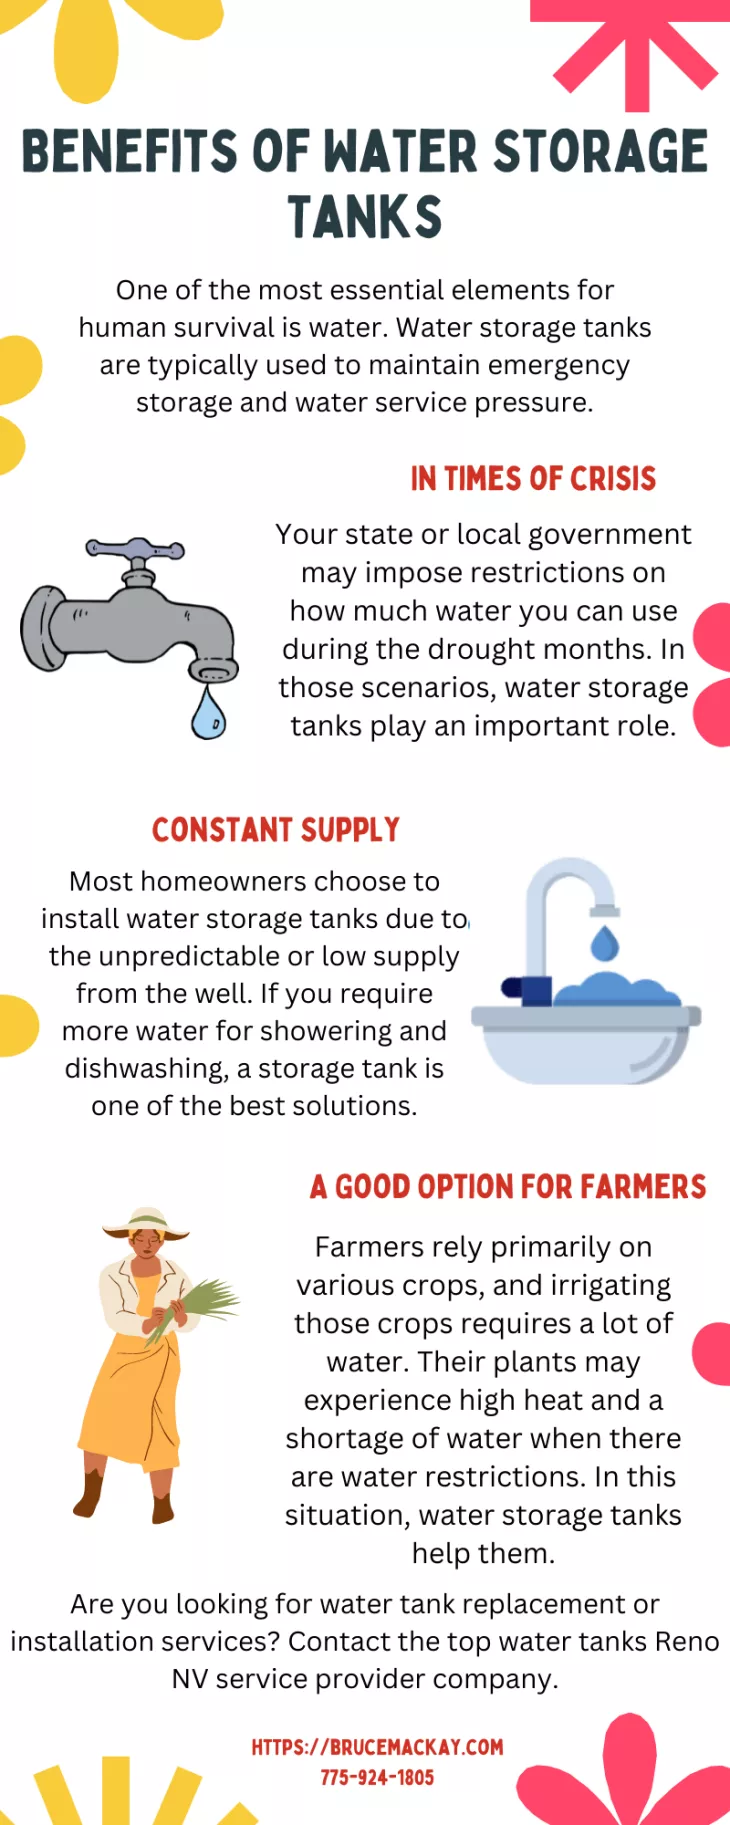 Benefits of Water Storage Tanks